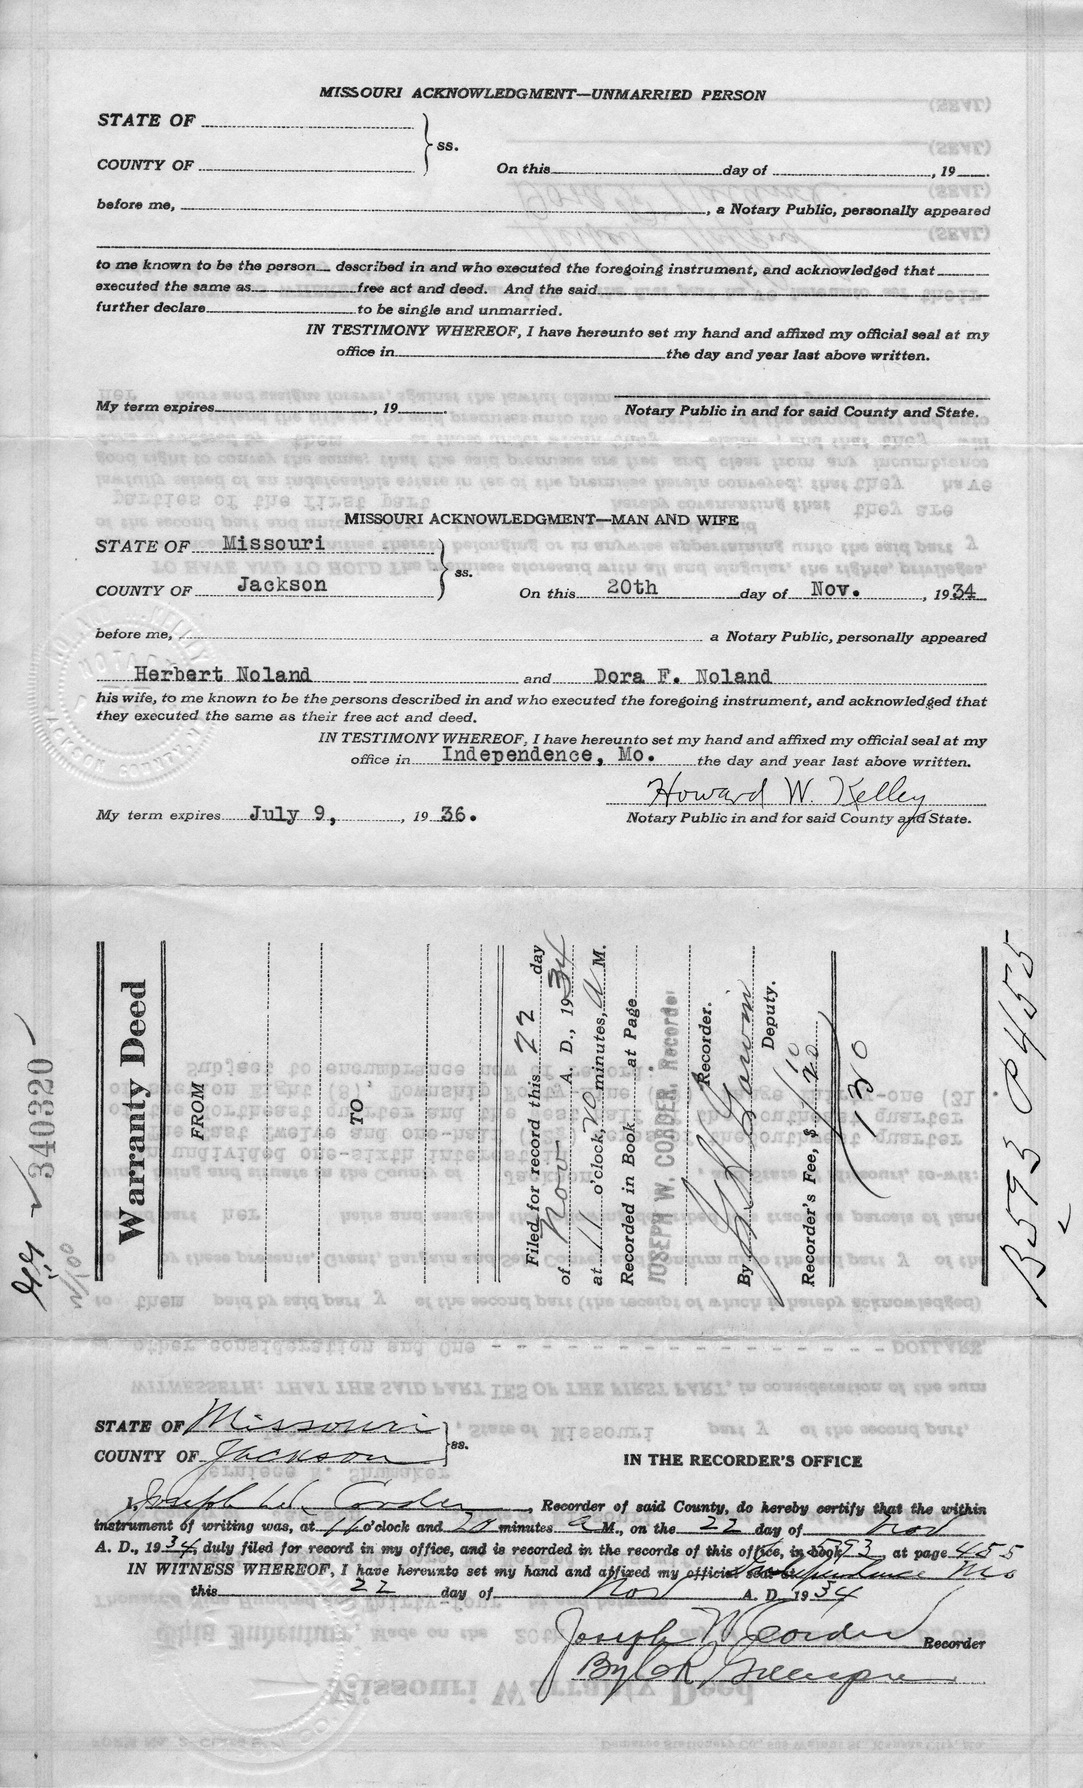 Warranty Deed from Herbert Noland and Dora F. Noland to Berneice N. Shumaker